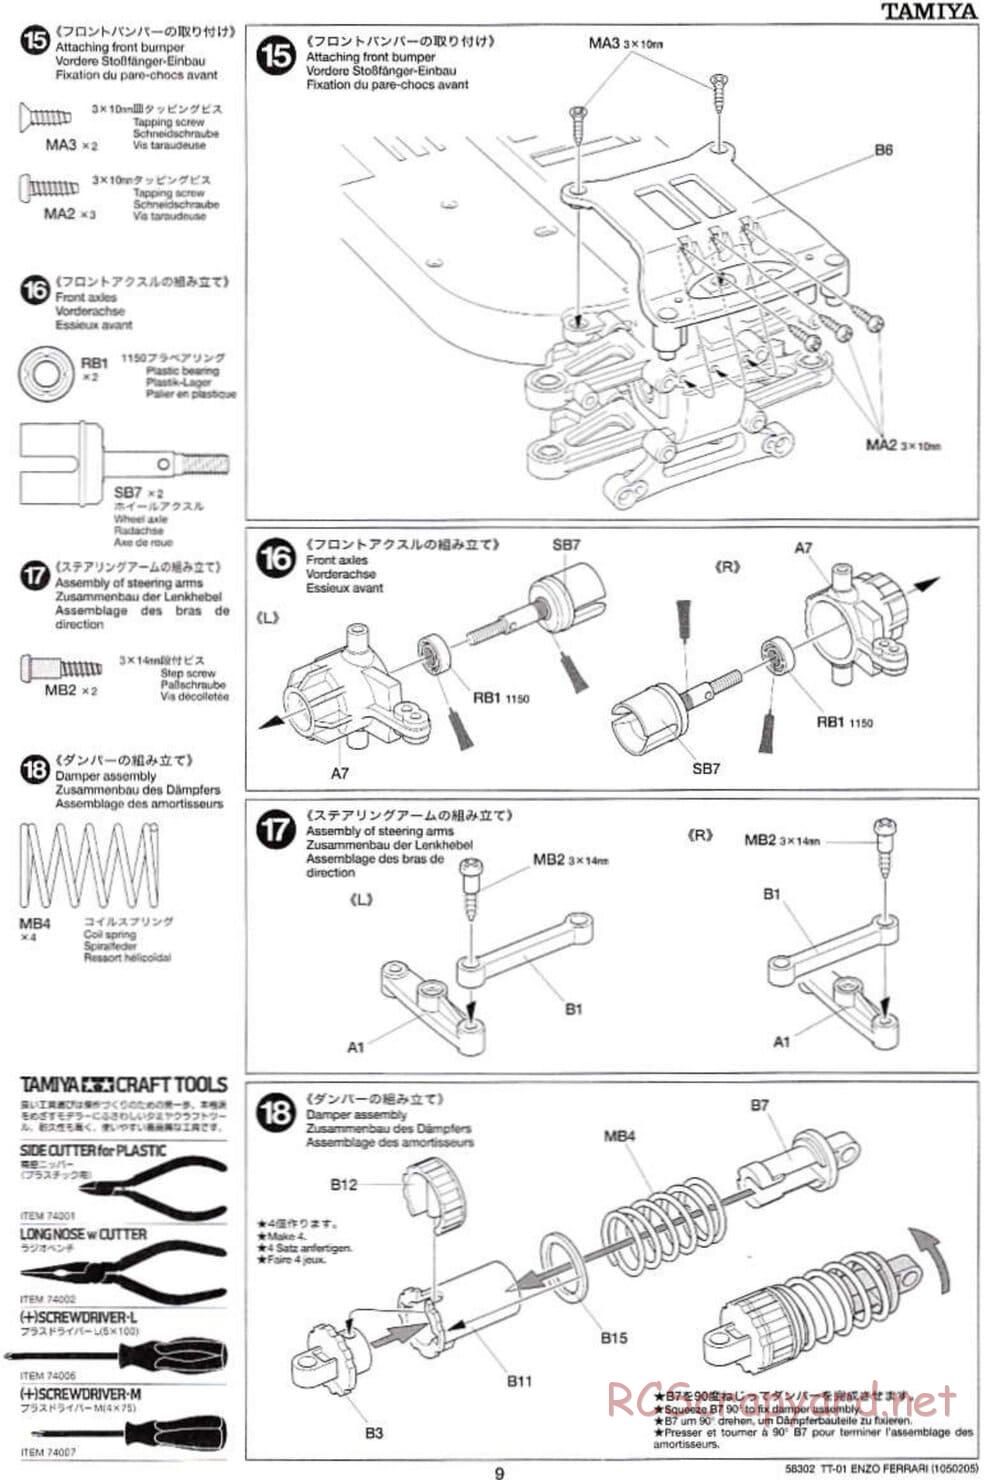 Tamiya - Enzo Ferrari - TT-01 Chassis - Manual - Page 9